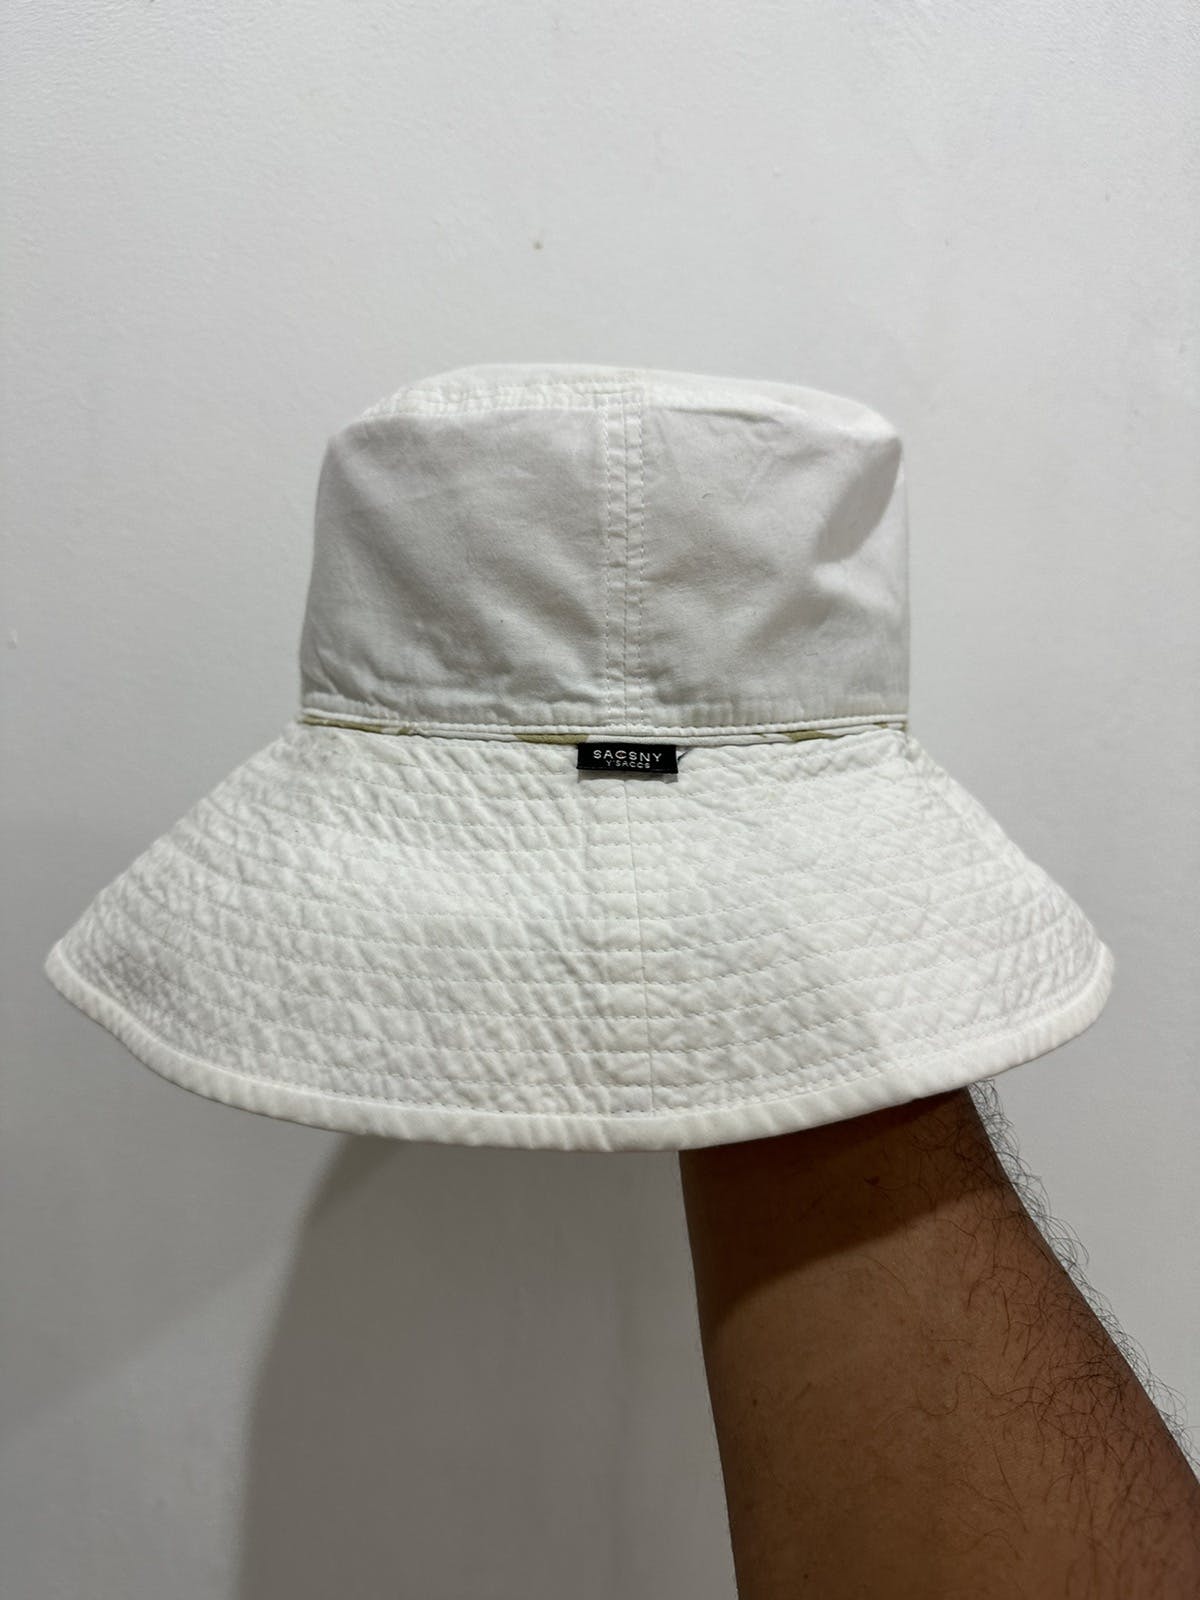 VTG Sacsny Y’saccs Sun Hats - 1